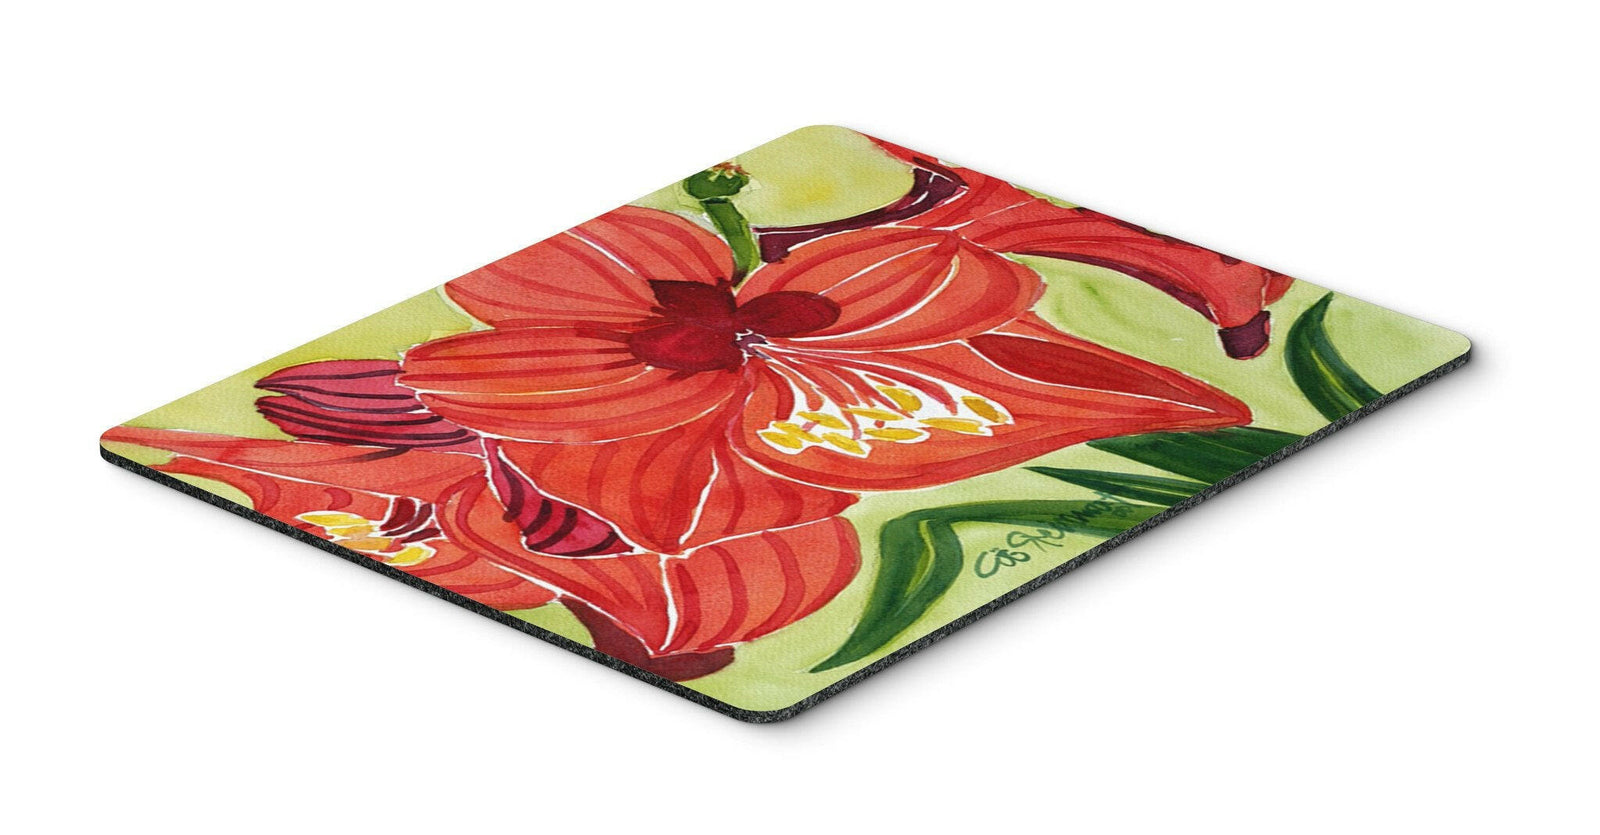 Flower - Amaryllis Mouse pad, hot pad, or trivet by Caroline's Treasures